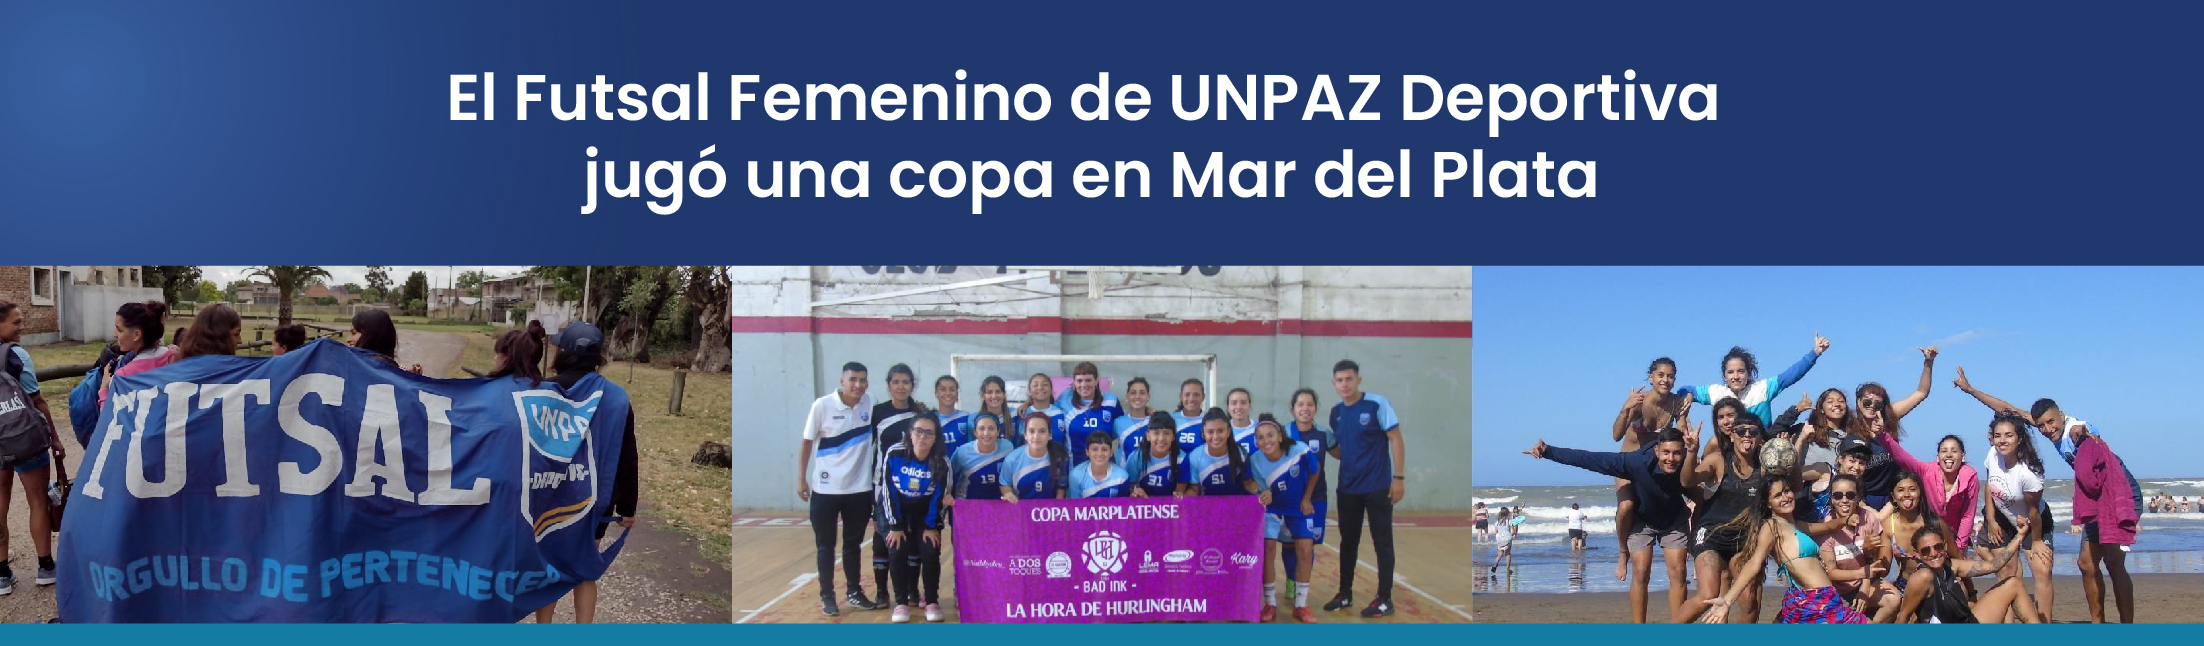 El Futsal Femenino de UNPAZ DEPORTIVA jugó una copa en Mar del Plata